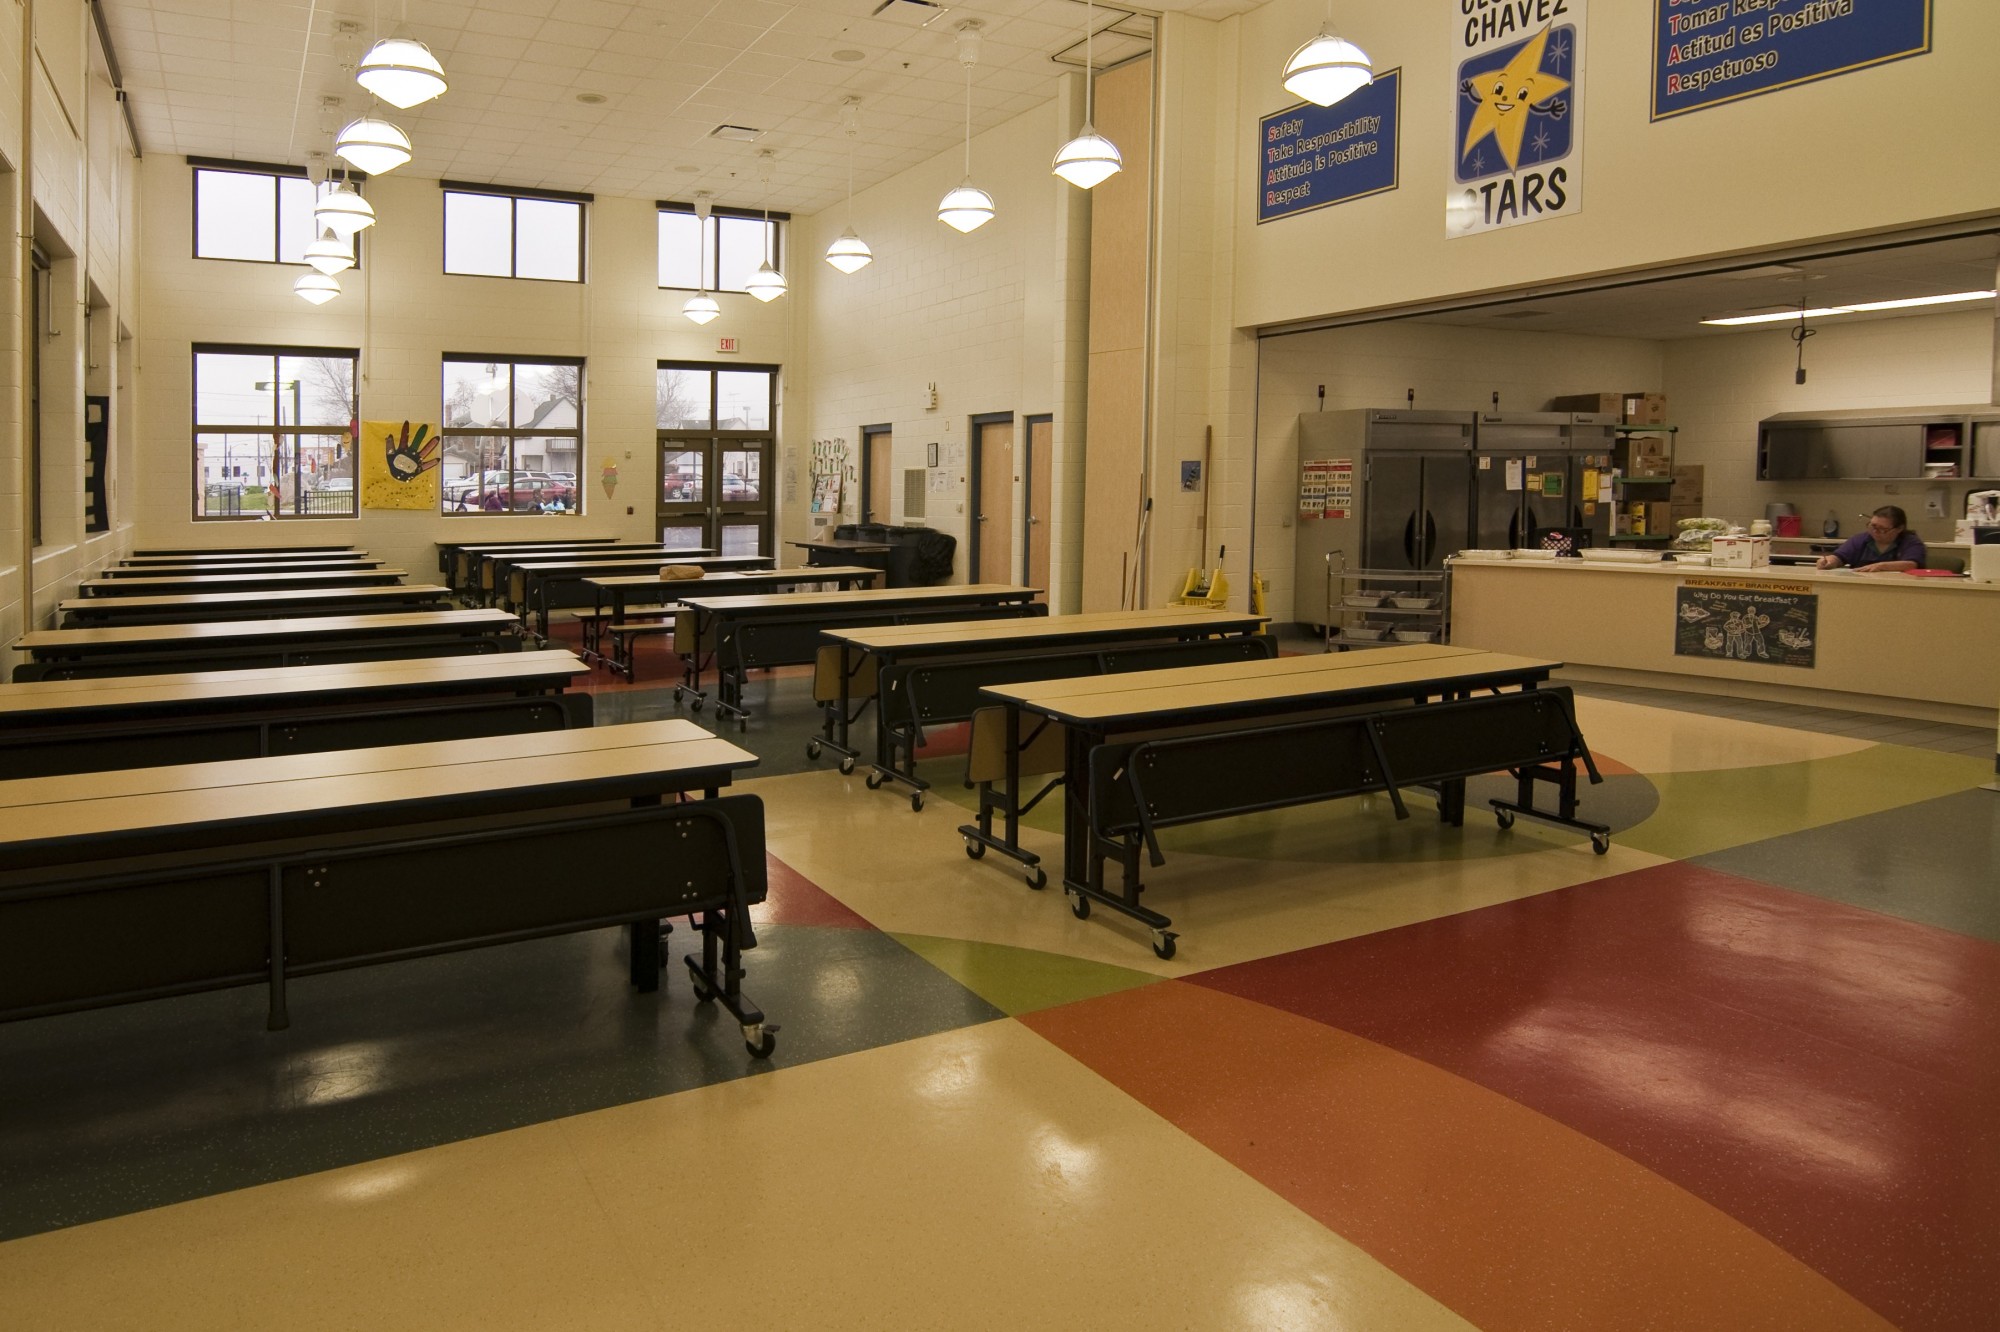 elementary school cafeteria